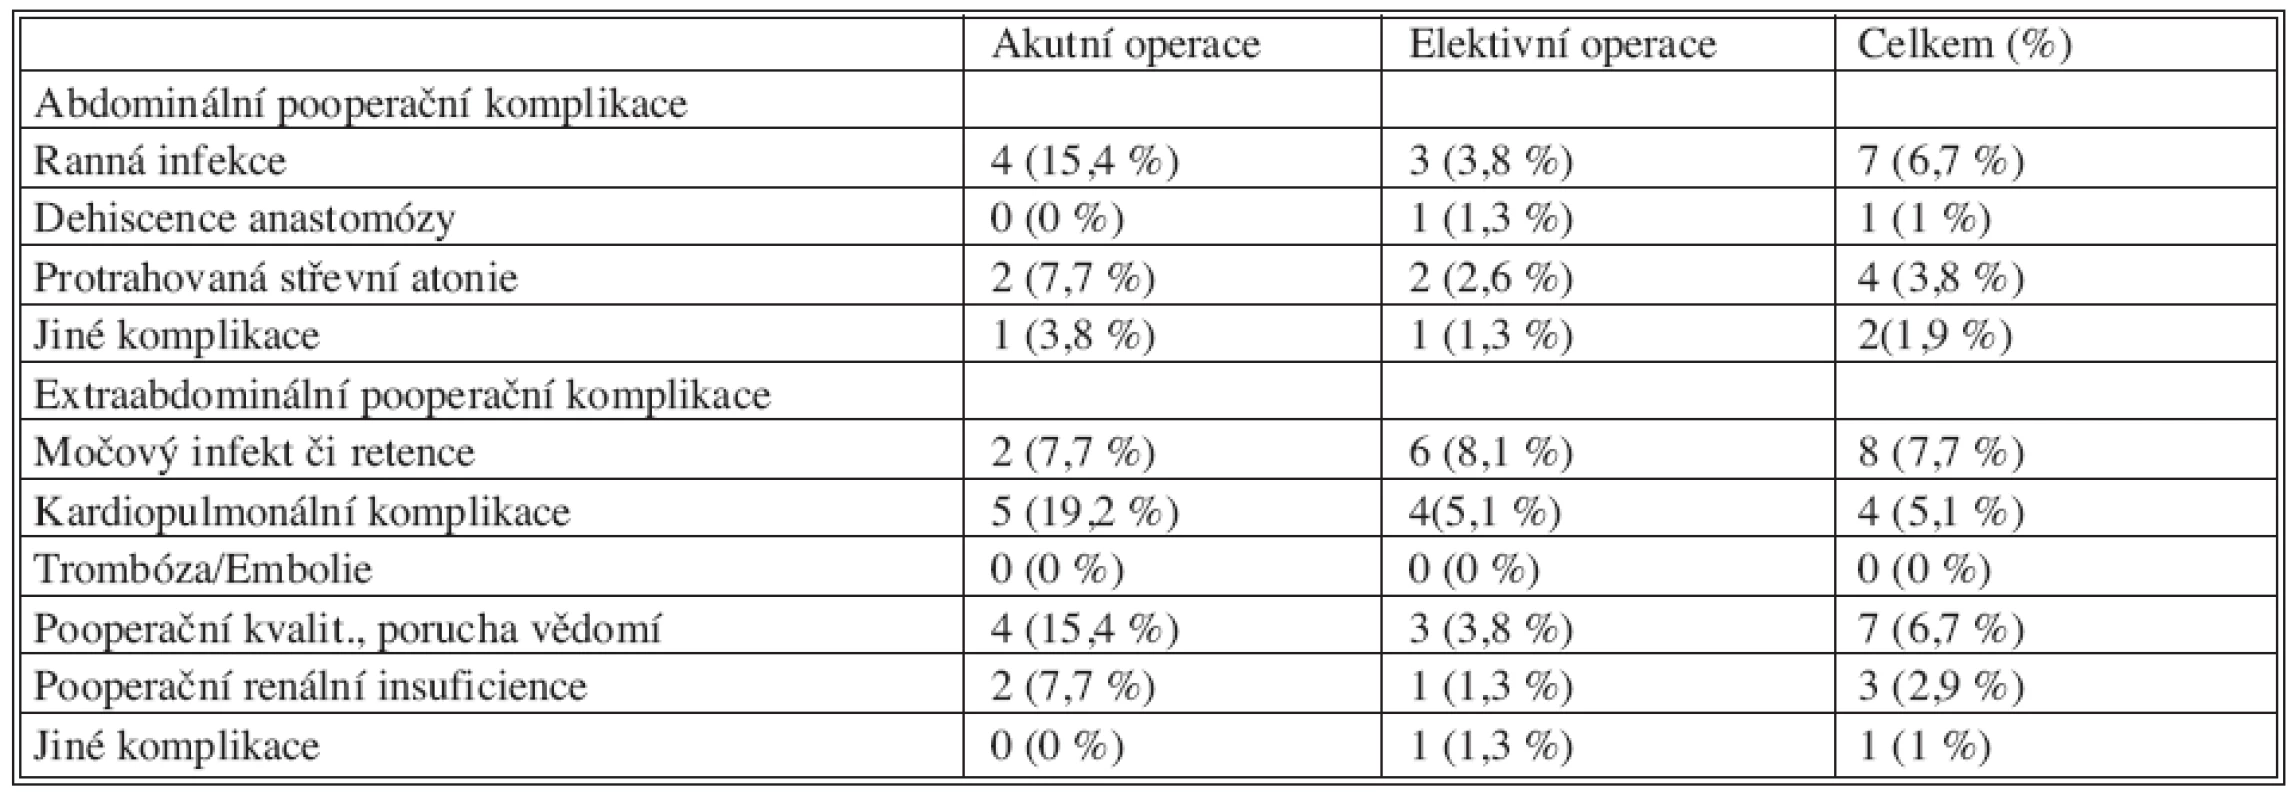 Abdominální a extraabdominální pooperační komplikace
Tab. 4. Abdominal and extraabdominal postoperative complications